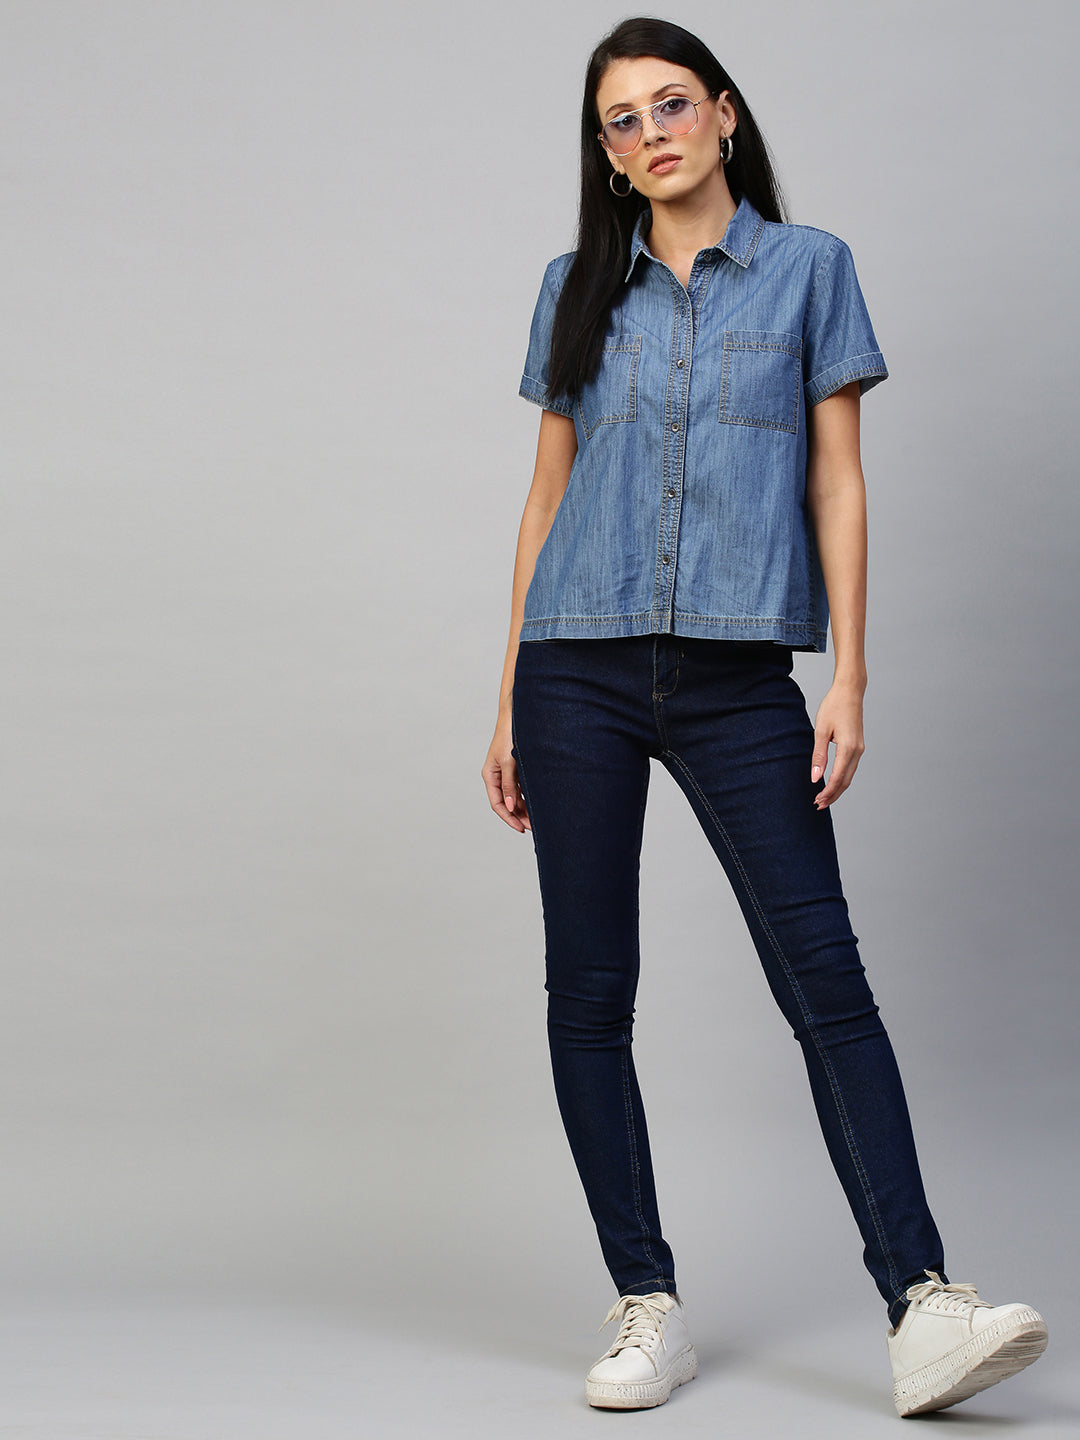 Mid Wash Blue, Light Weight Denim Short Sleeved Crop Shirt With Contrast Detailing